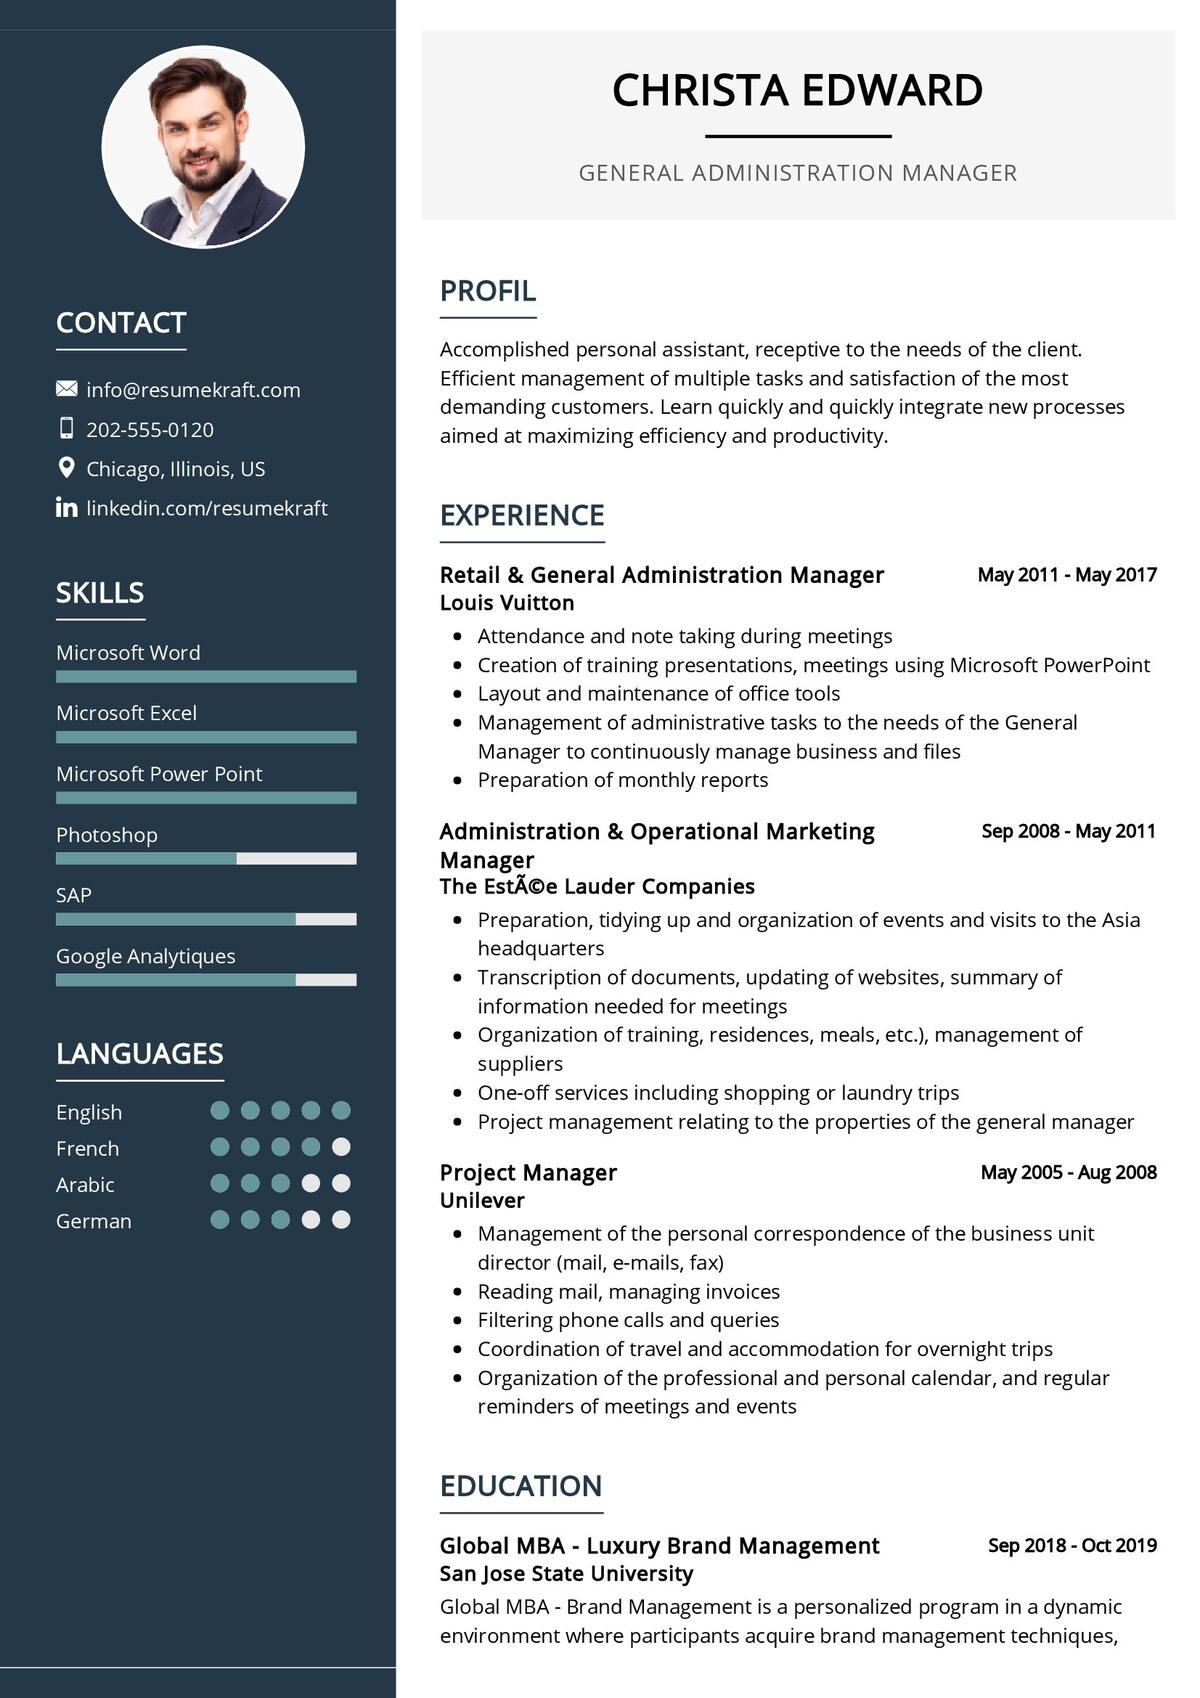 400+ Professional Resume Samples for 2021 ResumeKraft